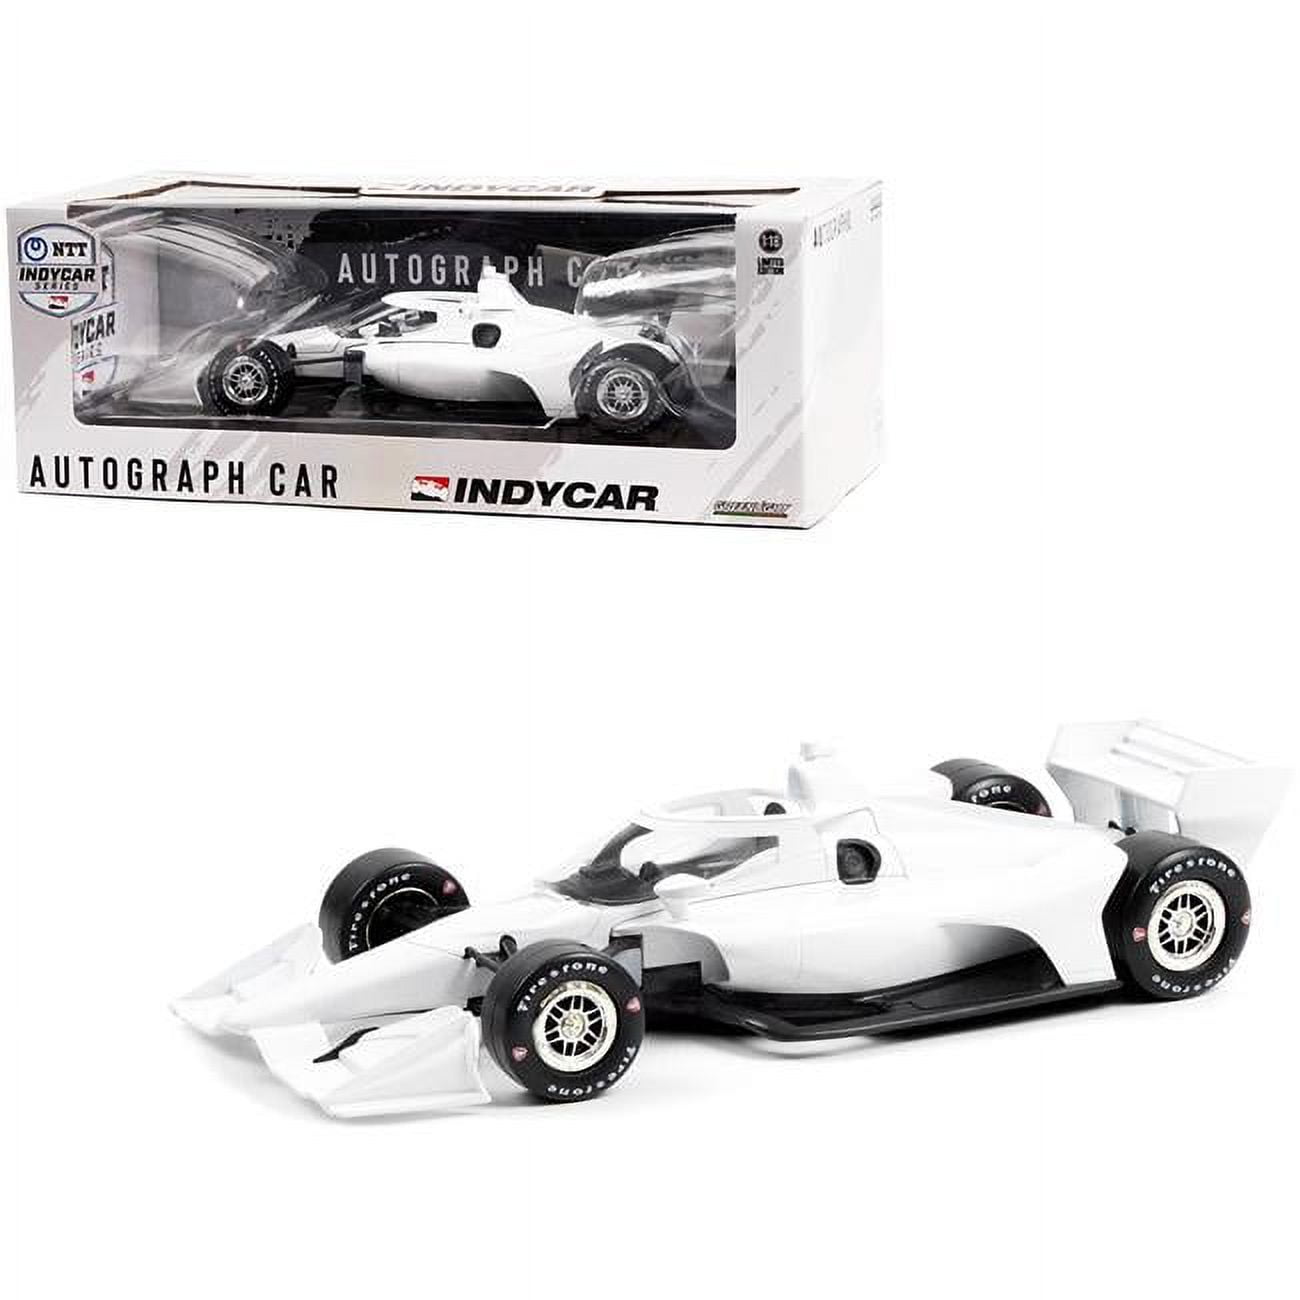 Picture of Greenlight 11122 1-18 Scale Diecast Dallara Indycar Autograph Car Ntt Indycar Series Model Car, White